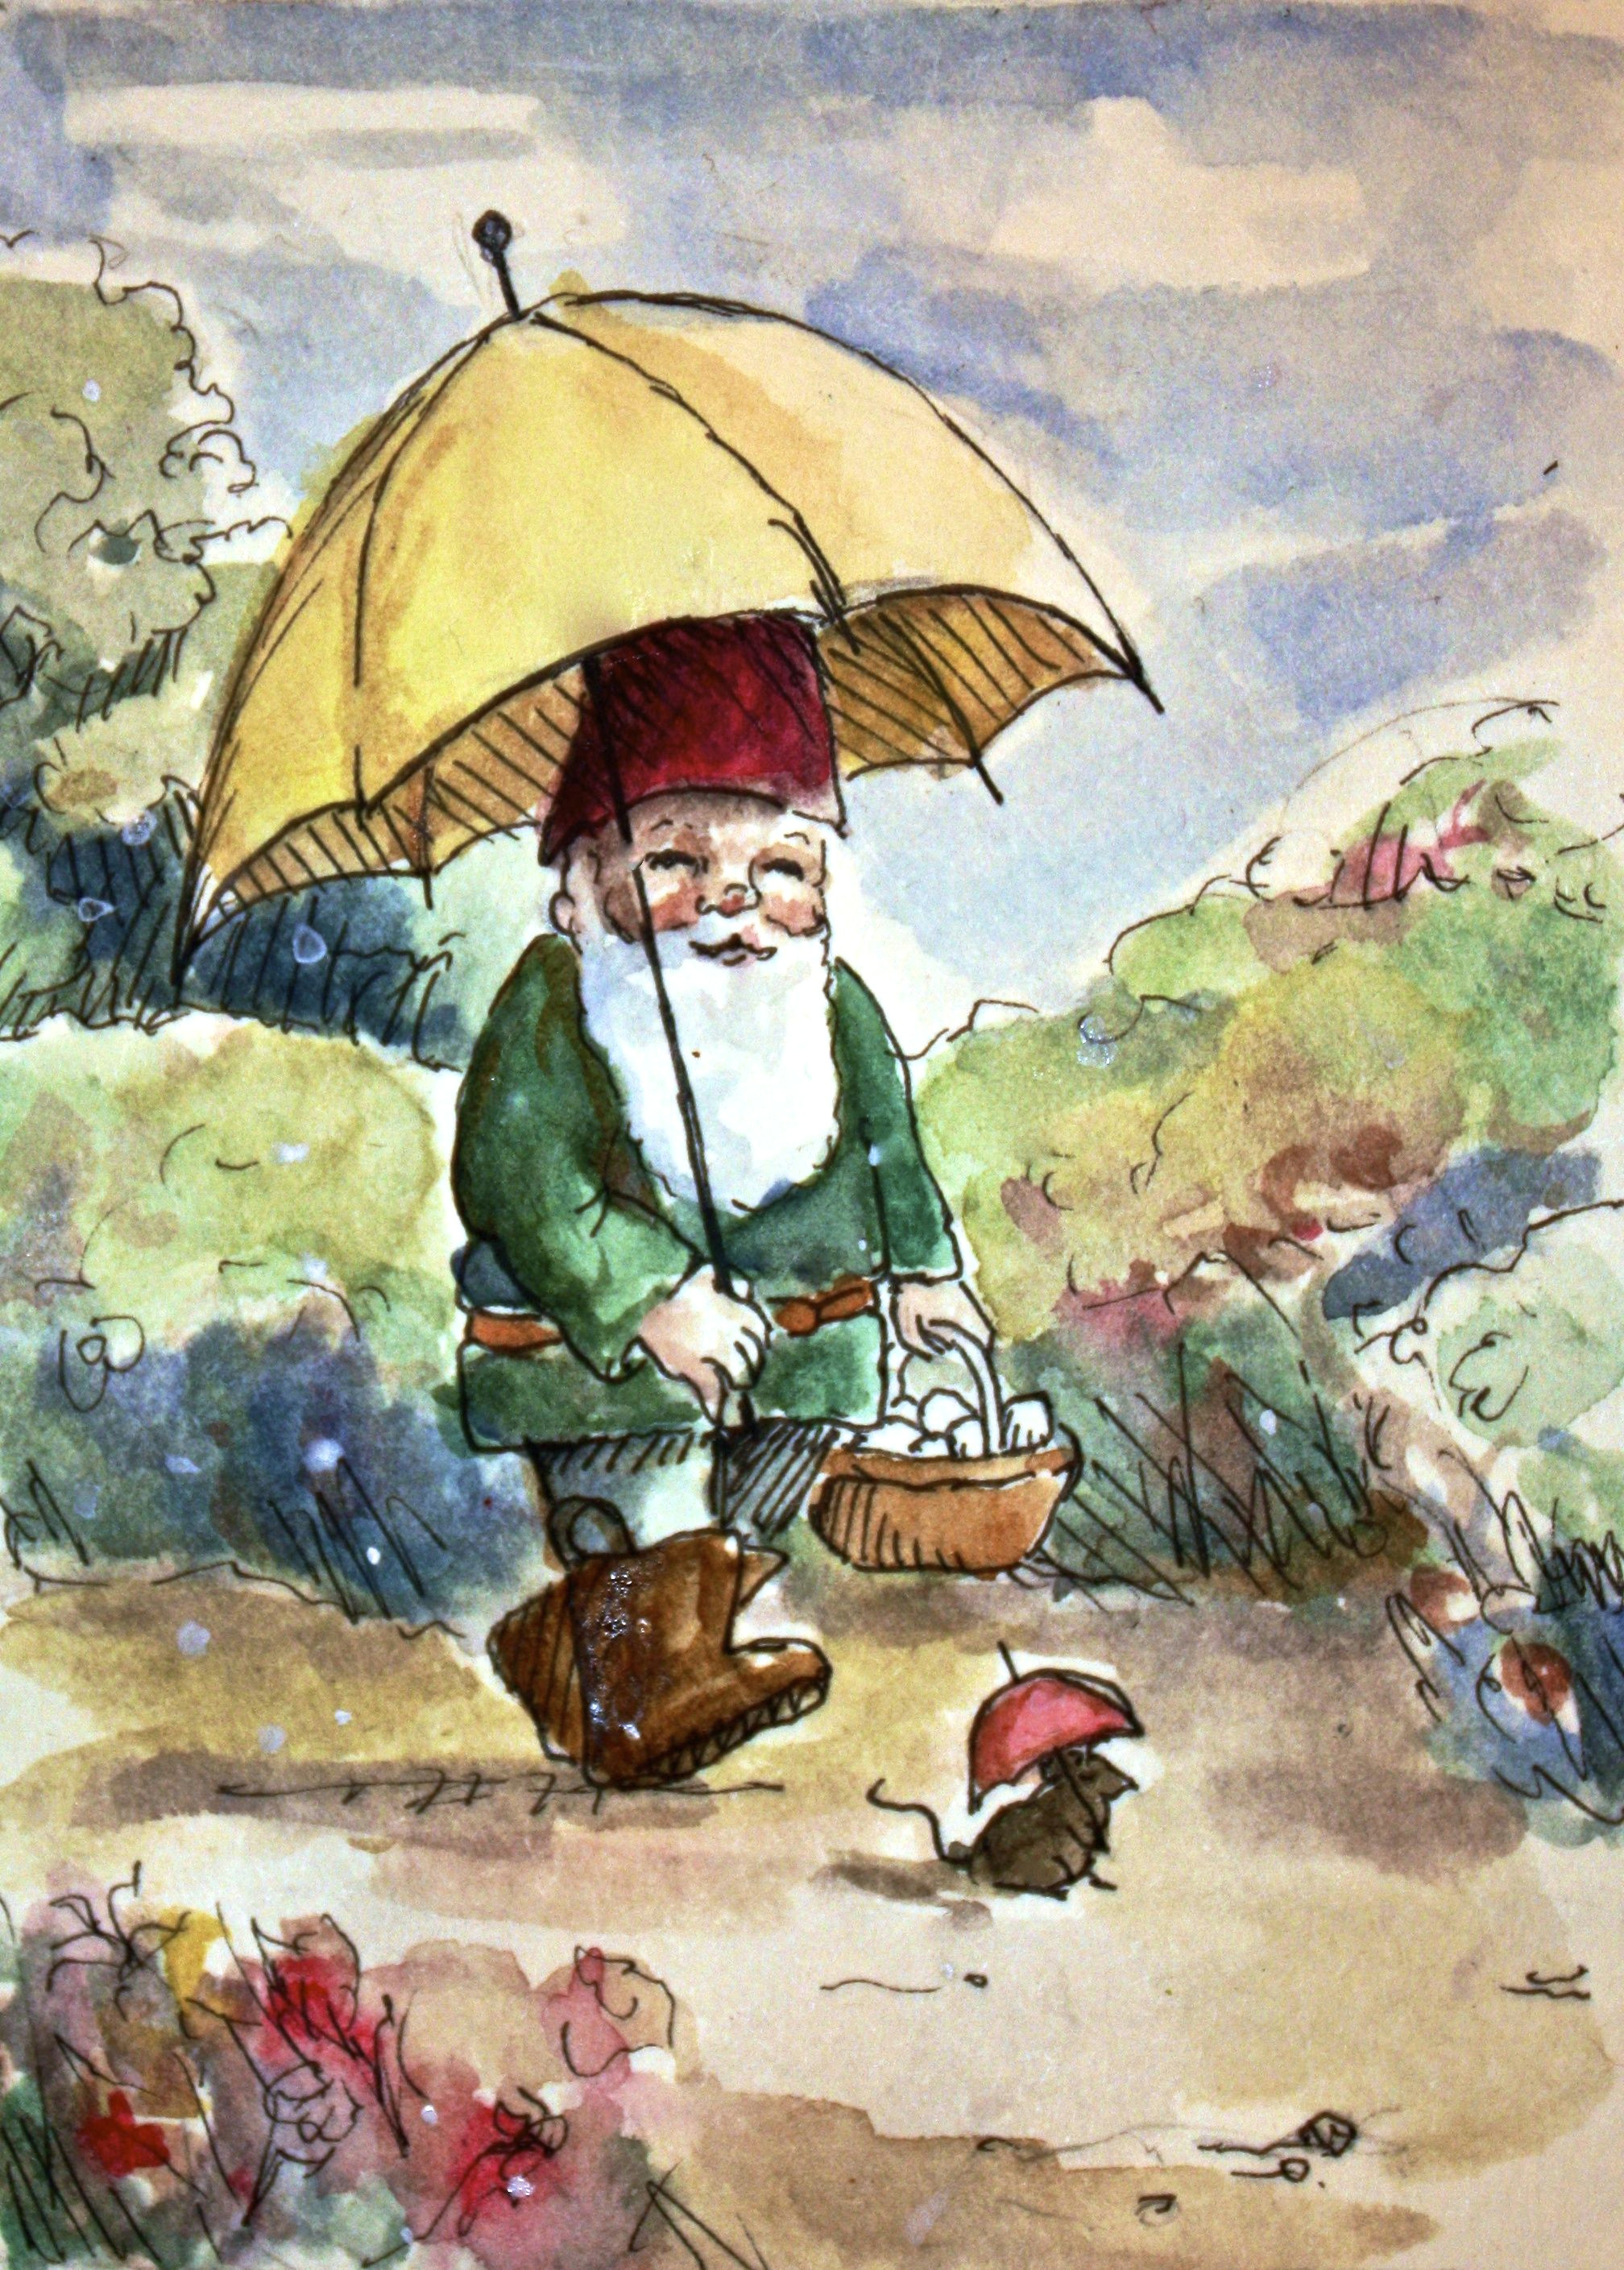 Cartoon Drawing Rainy Day even A Rainy Day Can Be Full Of Joy Jollygnome Com Jollygnome